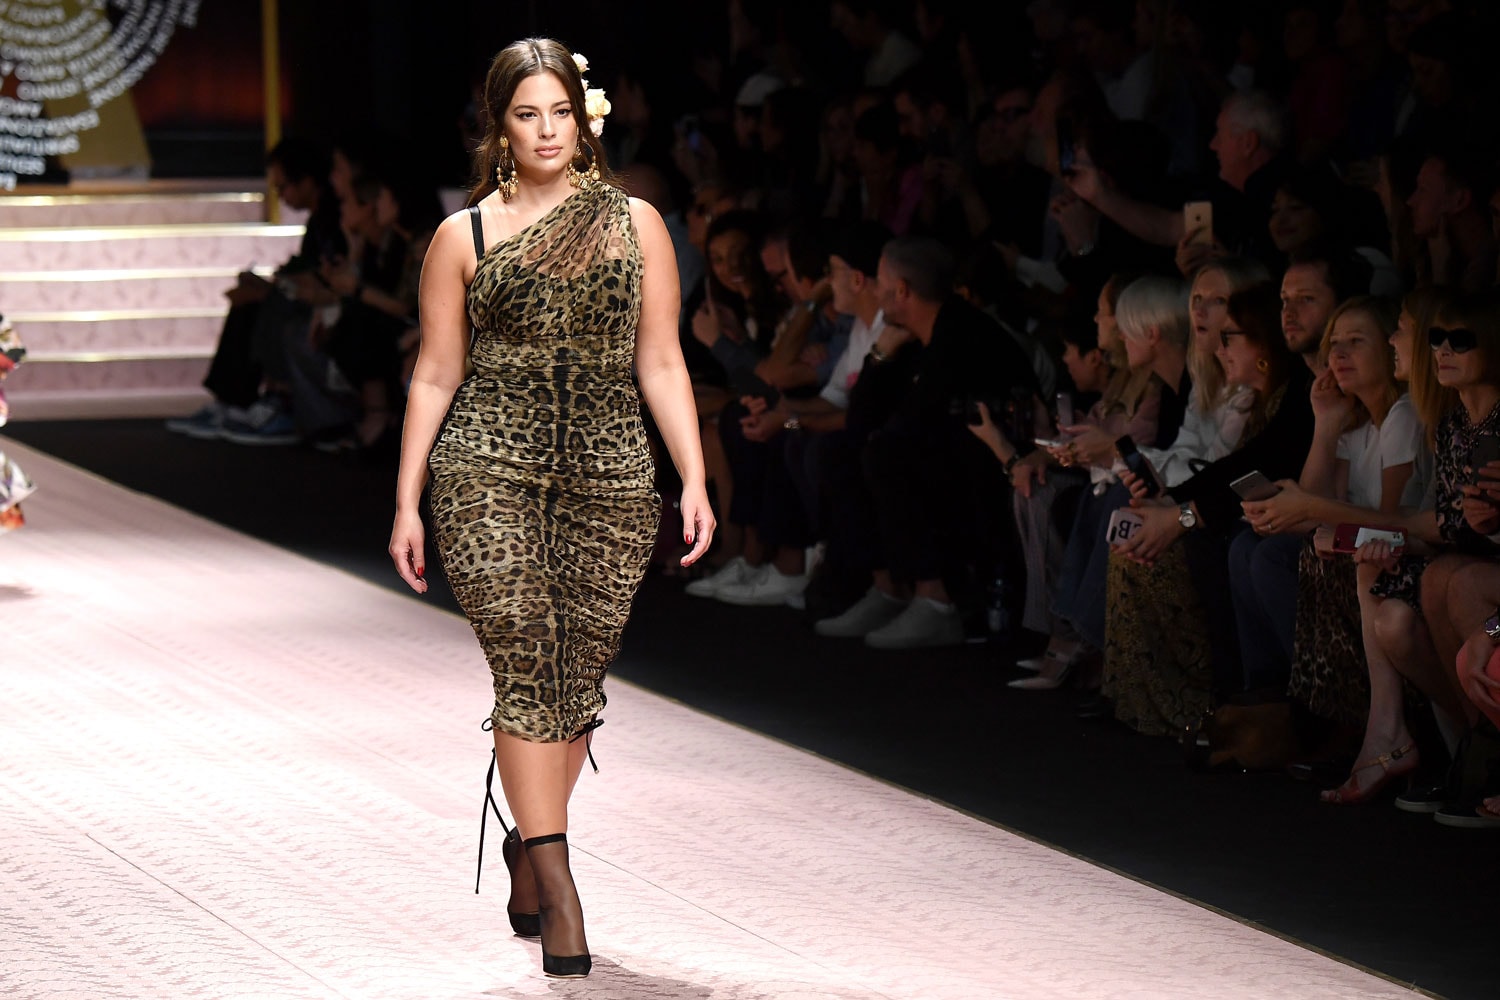 plus size model runway show fashion black women body positivity representation diversity 